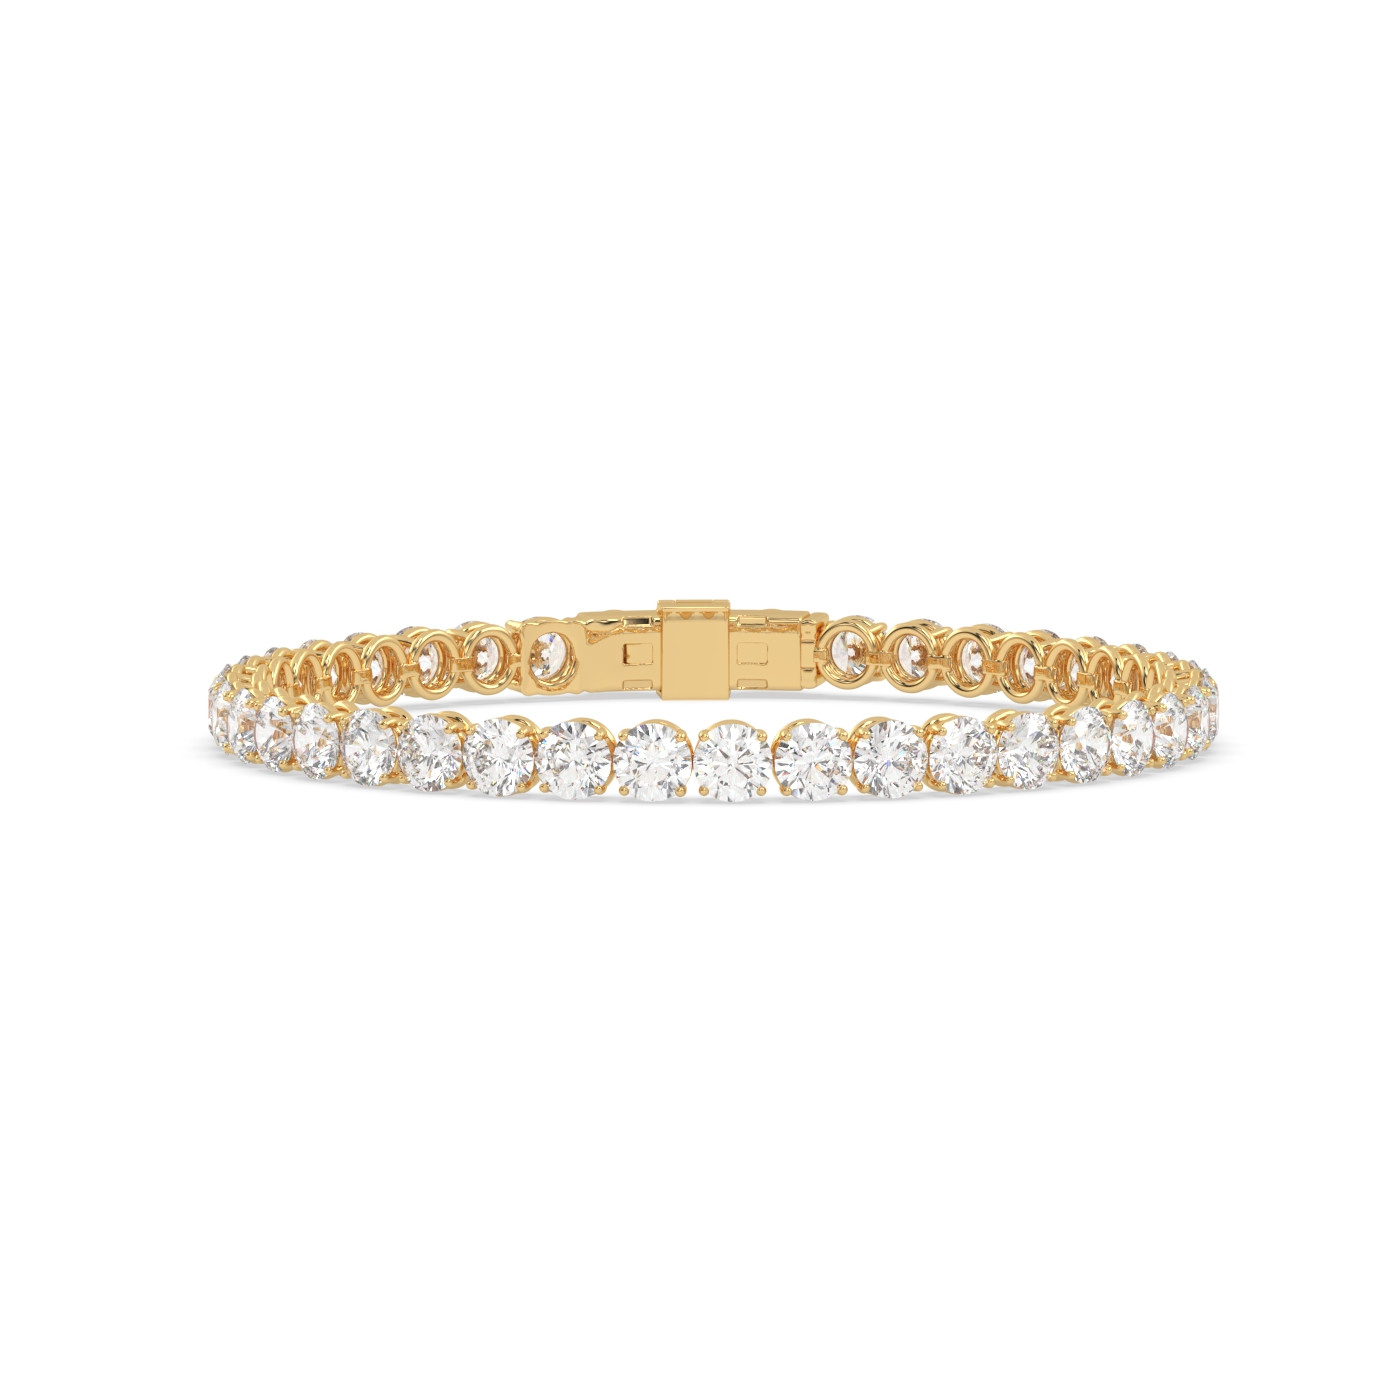 18k yellow gold 10 carat round diamond tennis bracelet with modern american lock system Photos & images